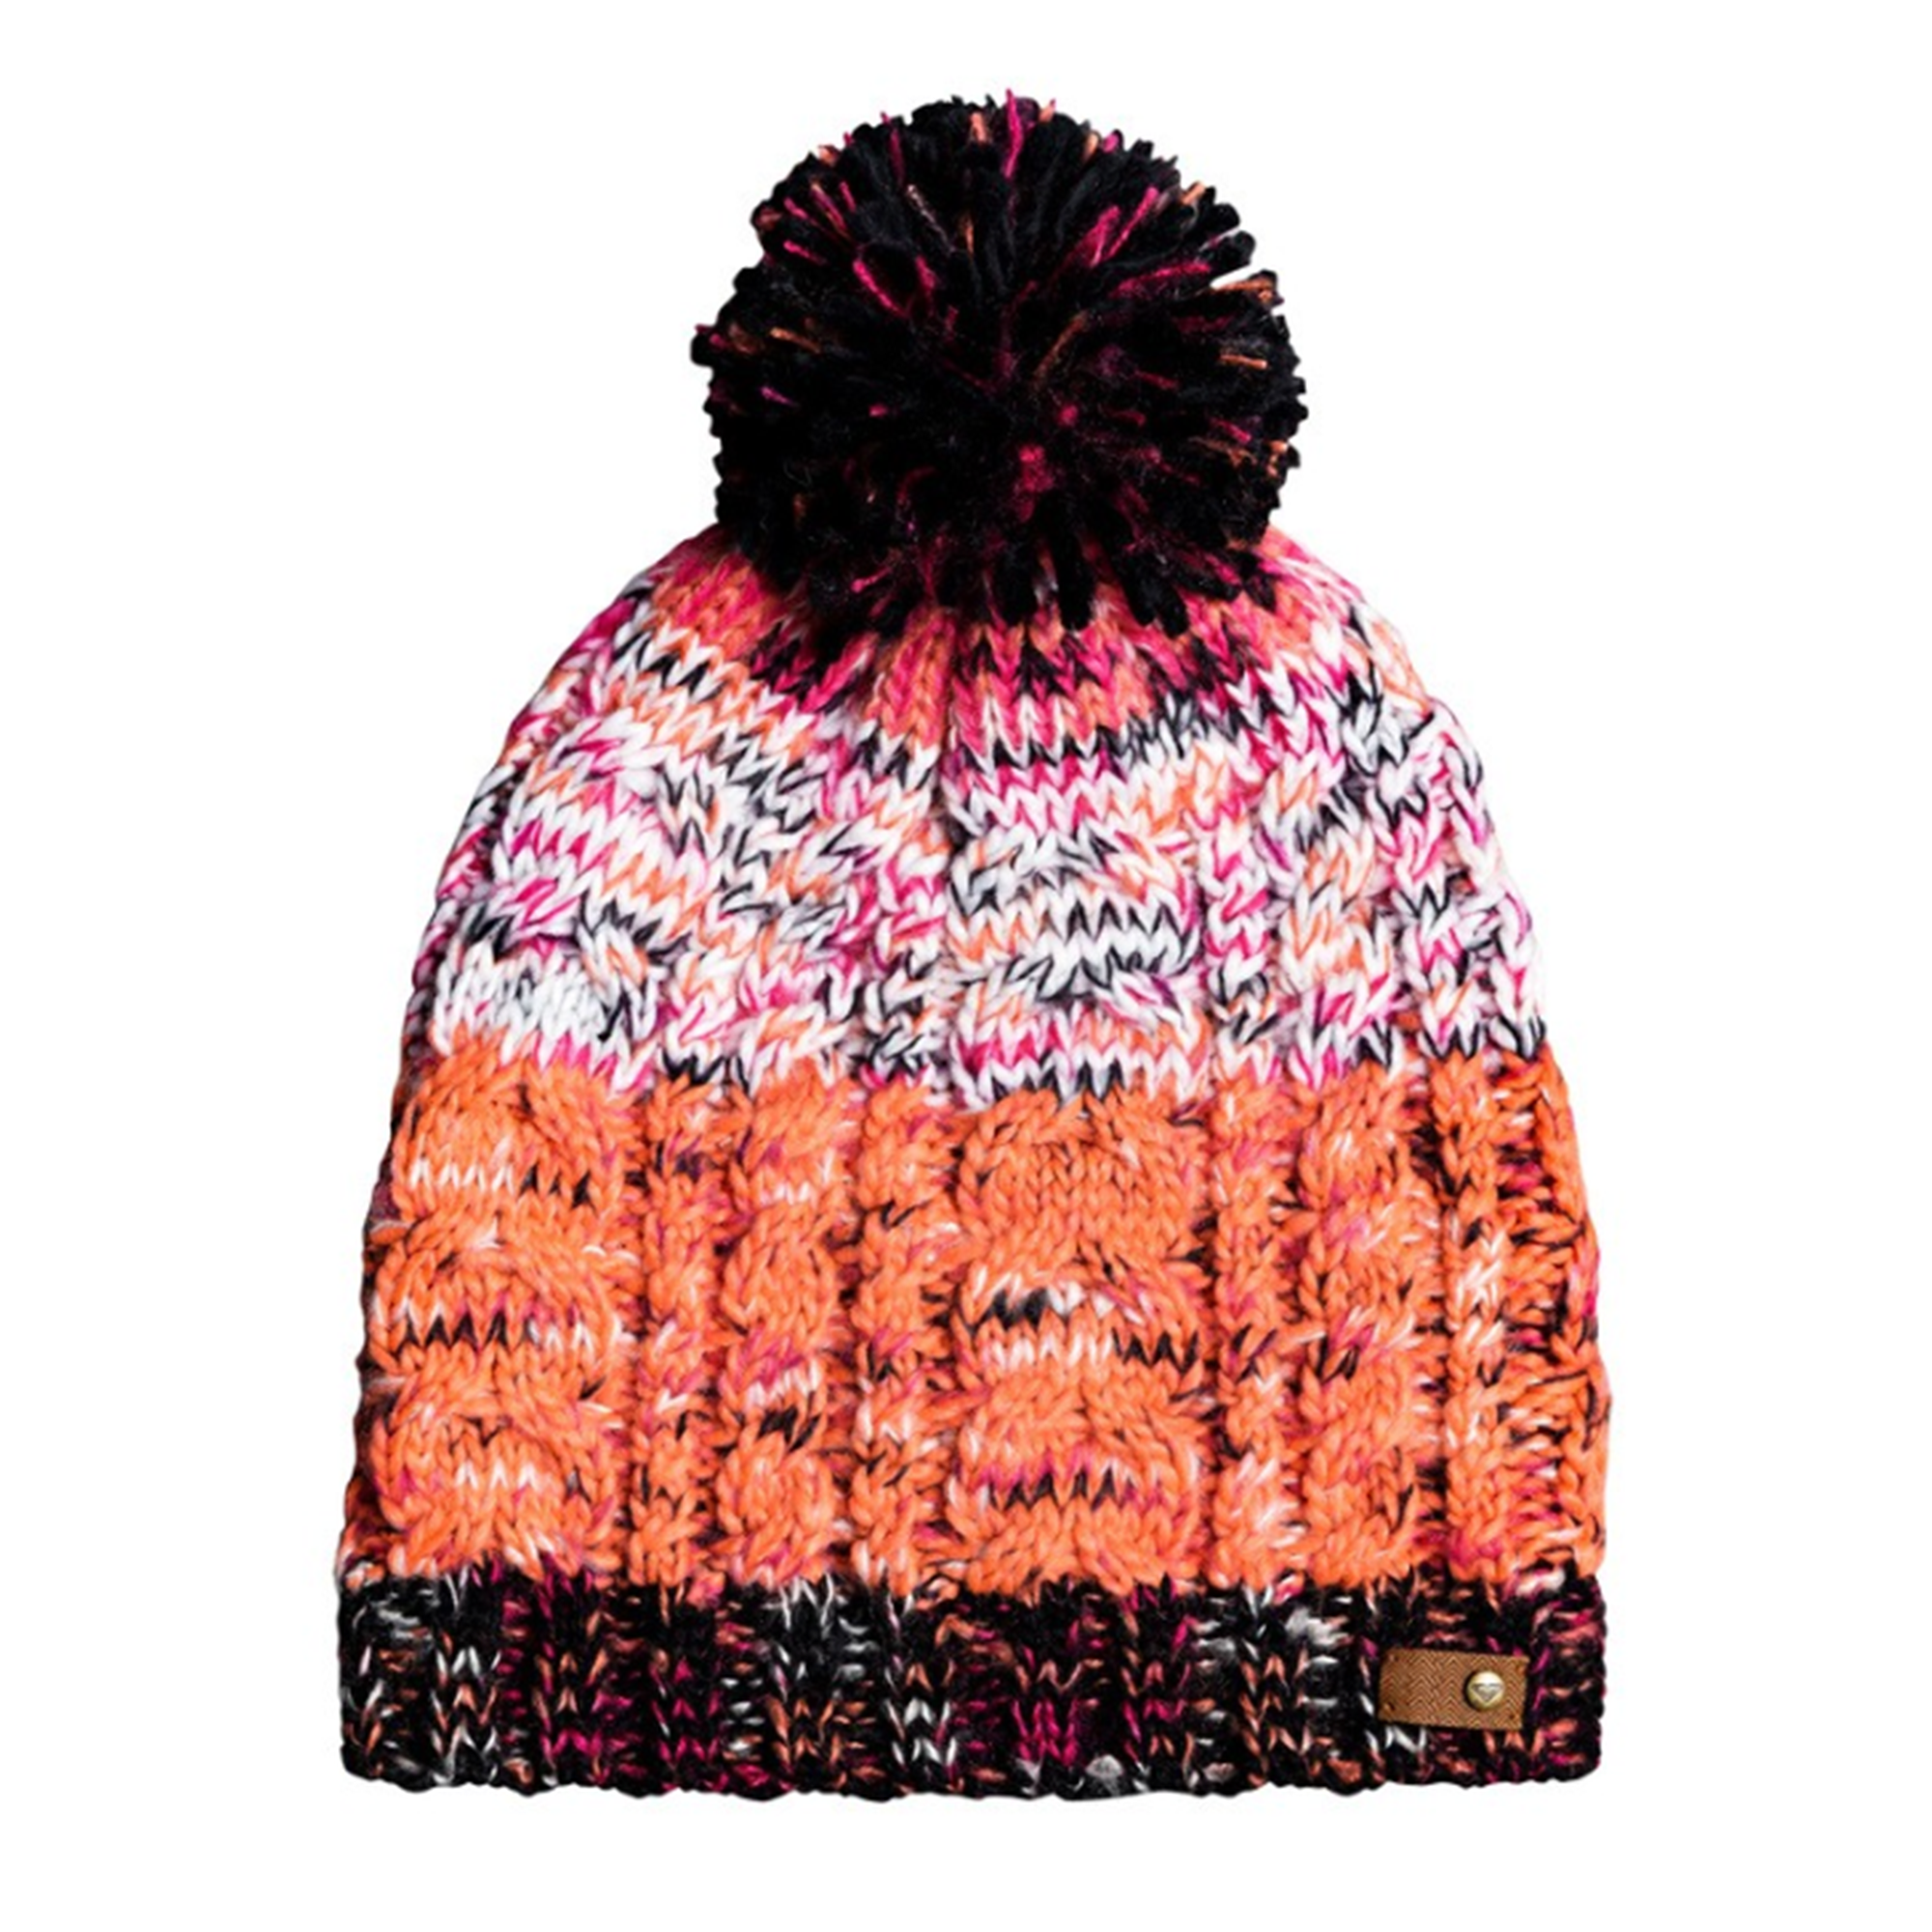 Amekon Womens Winter Warm Knitted Ski Beanie Slouchy Hat Teen Girls Ski Outdoor Cap with Faux Fur Bobble Pom Pom 